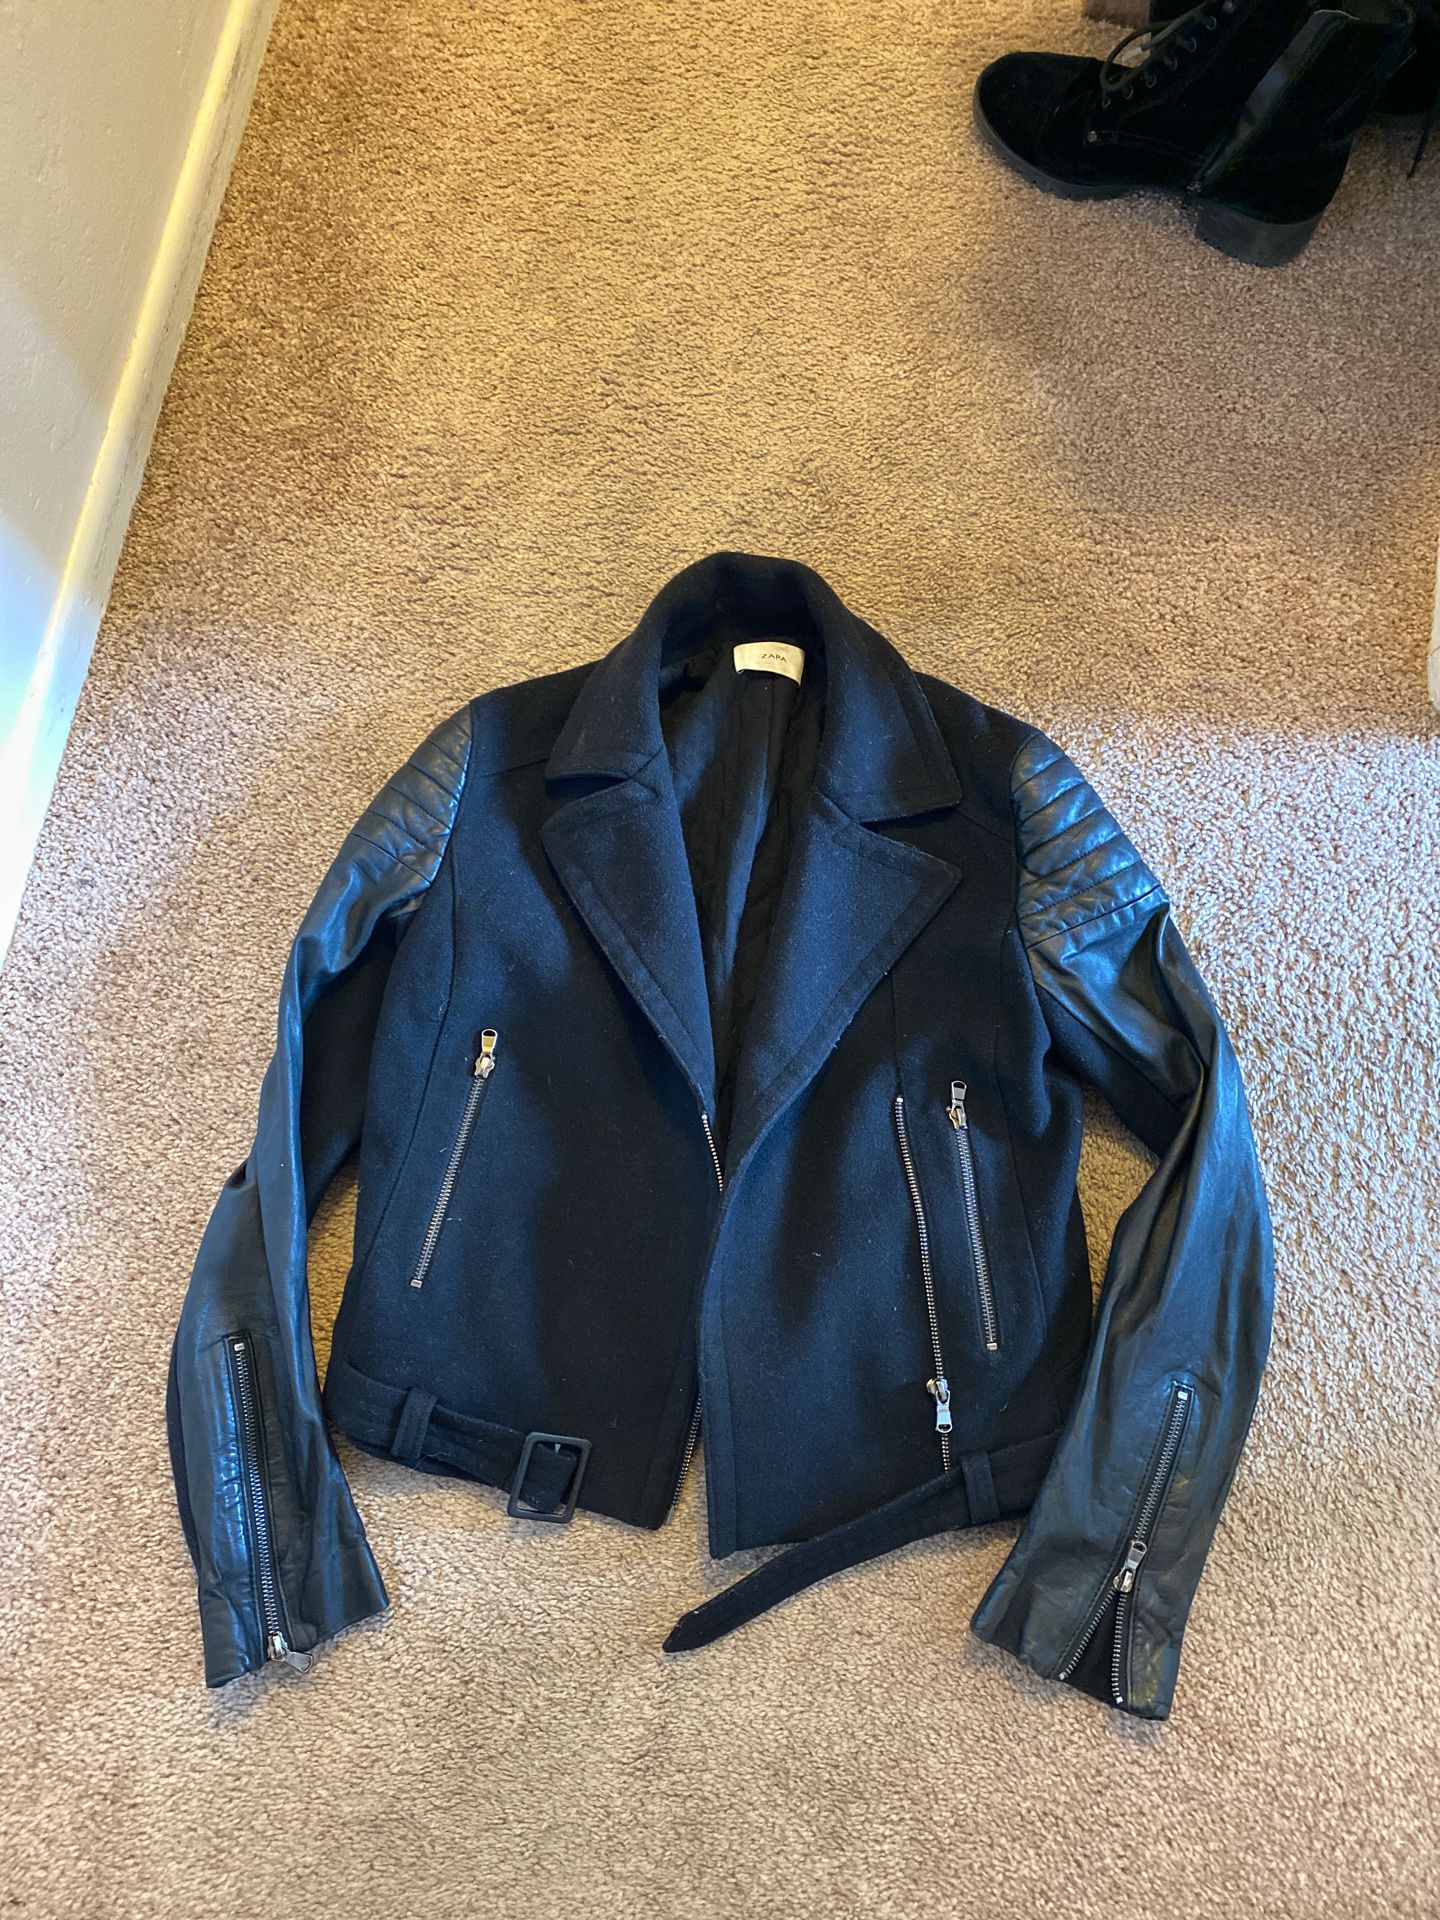 Zapa black jacket Motorcycle leather like black Zara cloth designer women’s small sweatshirt cloth style fashion black